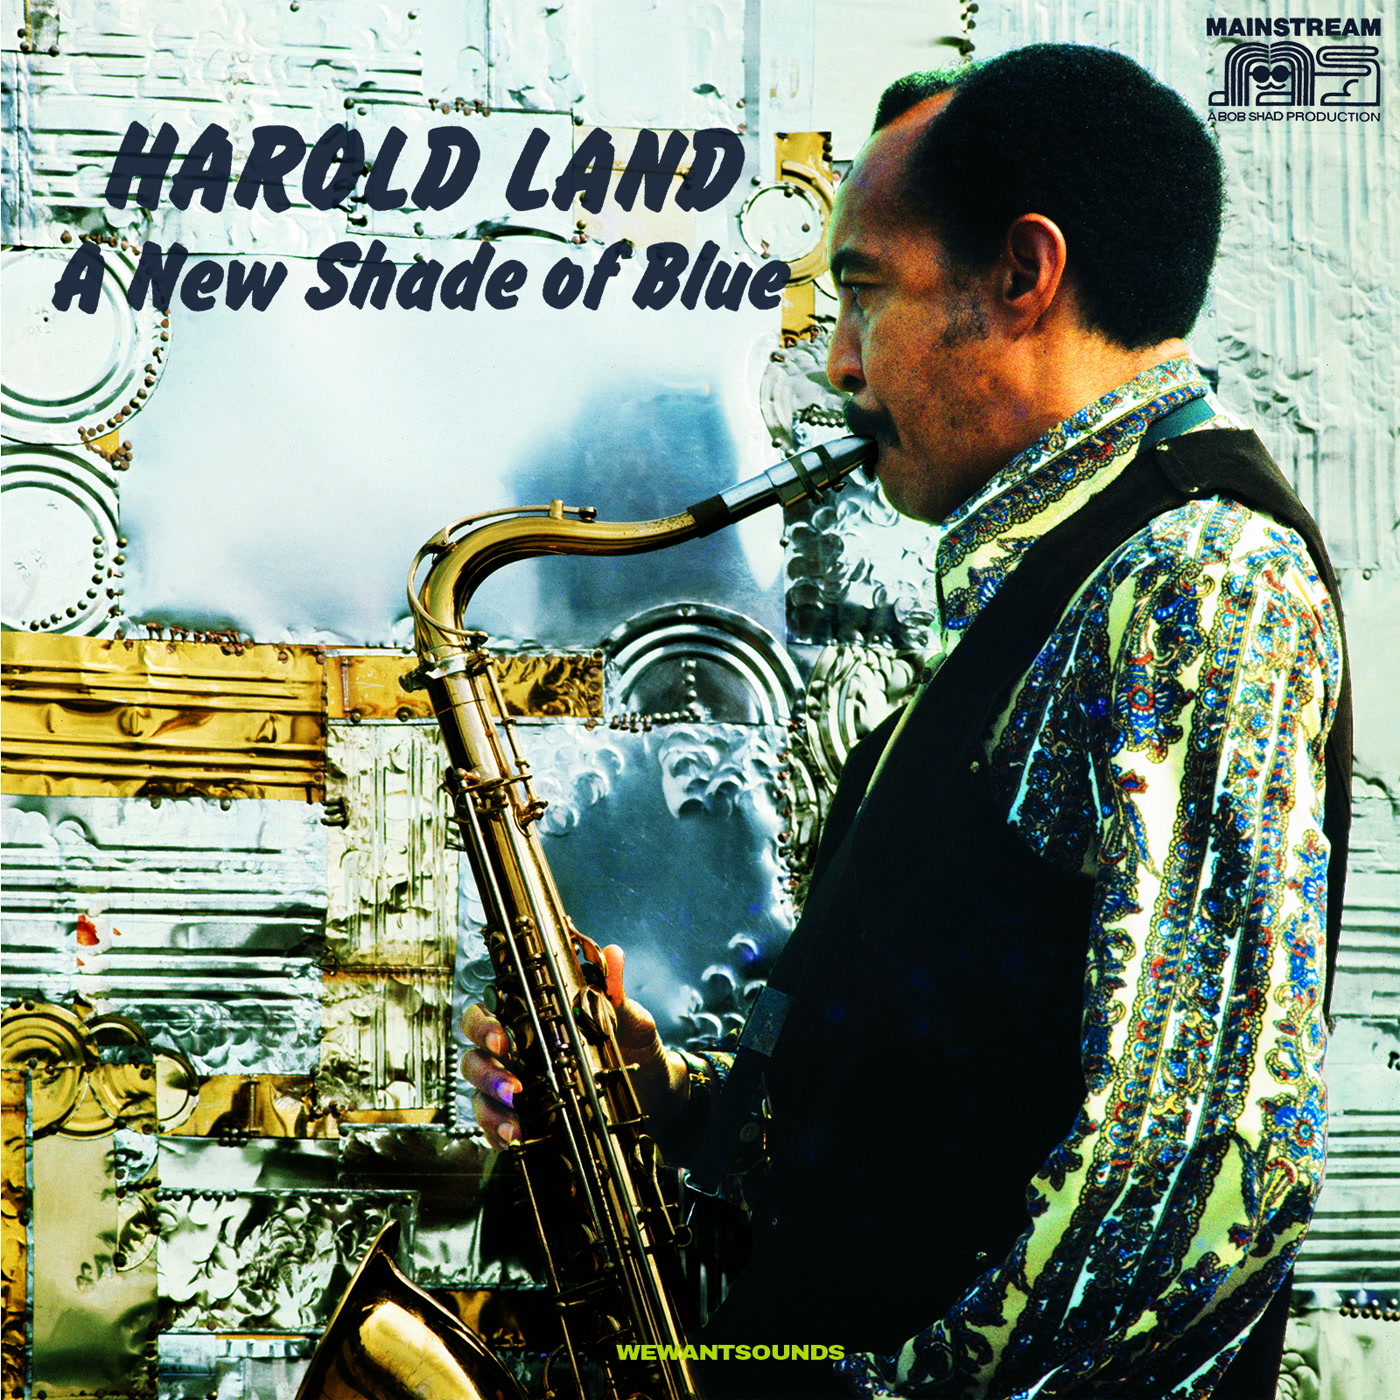 Harold Land – A New Shade of Blue (Wewantsounds)